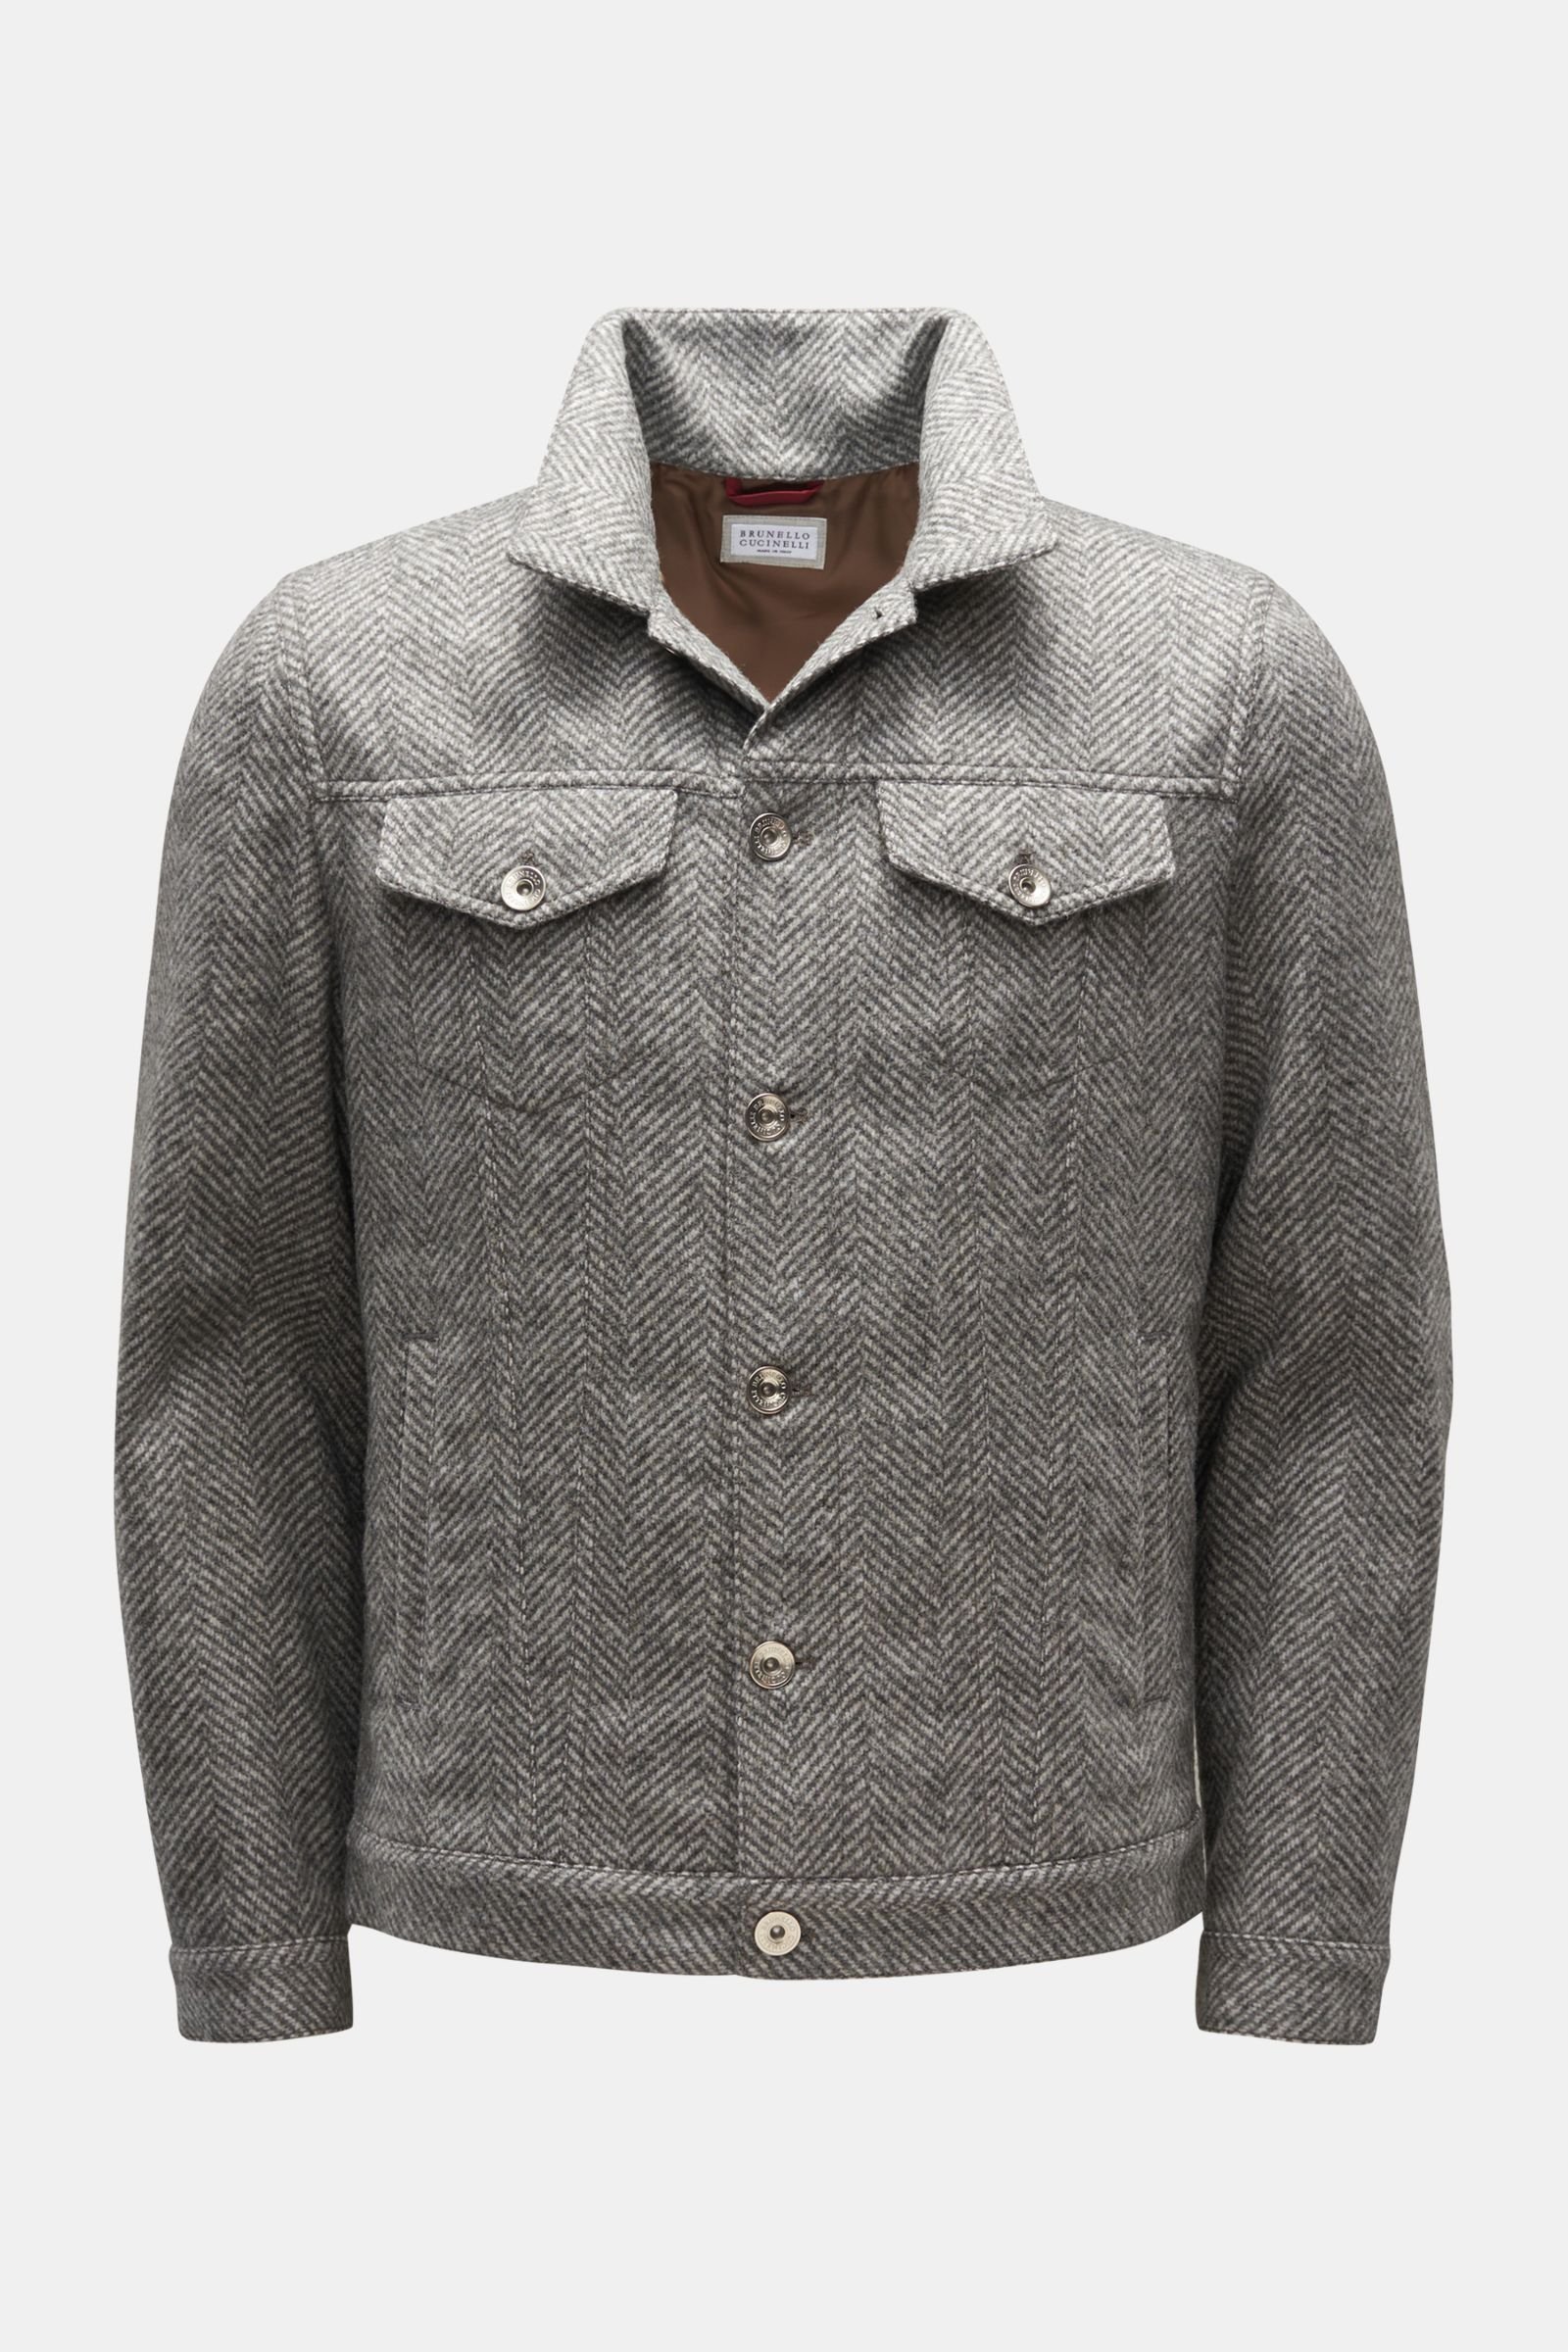 Jacket grey patterned